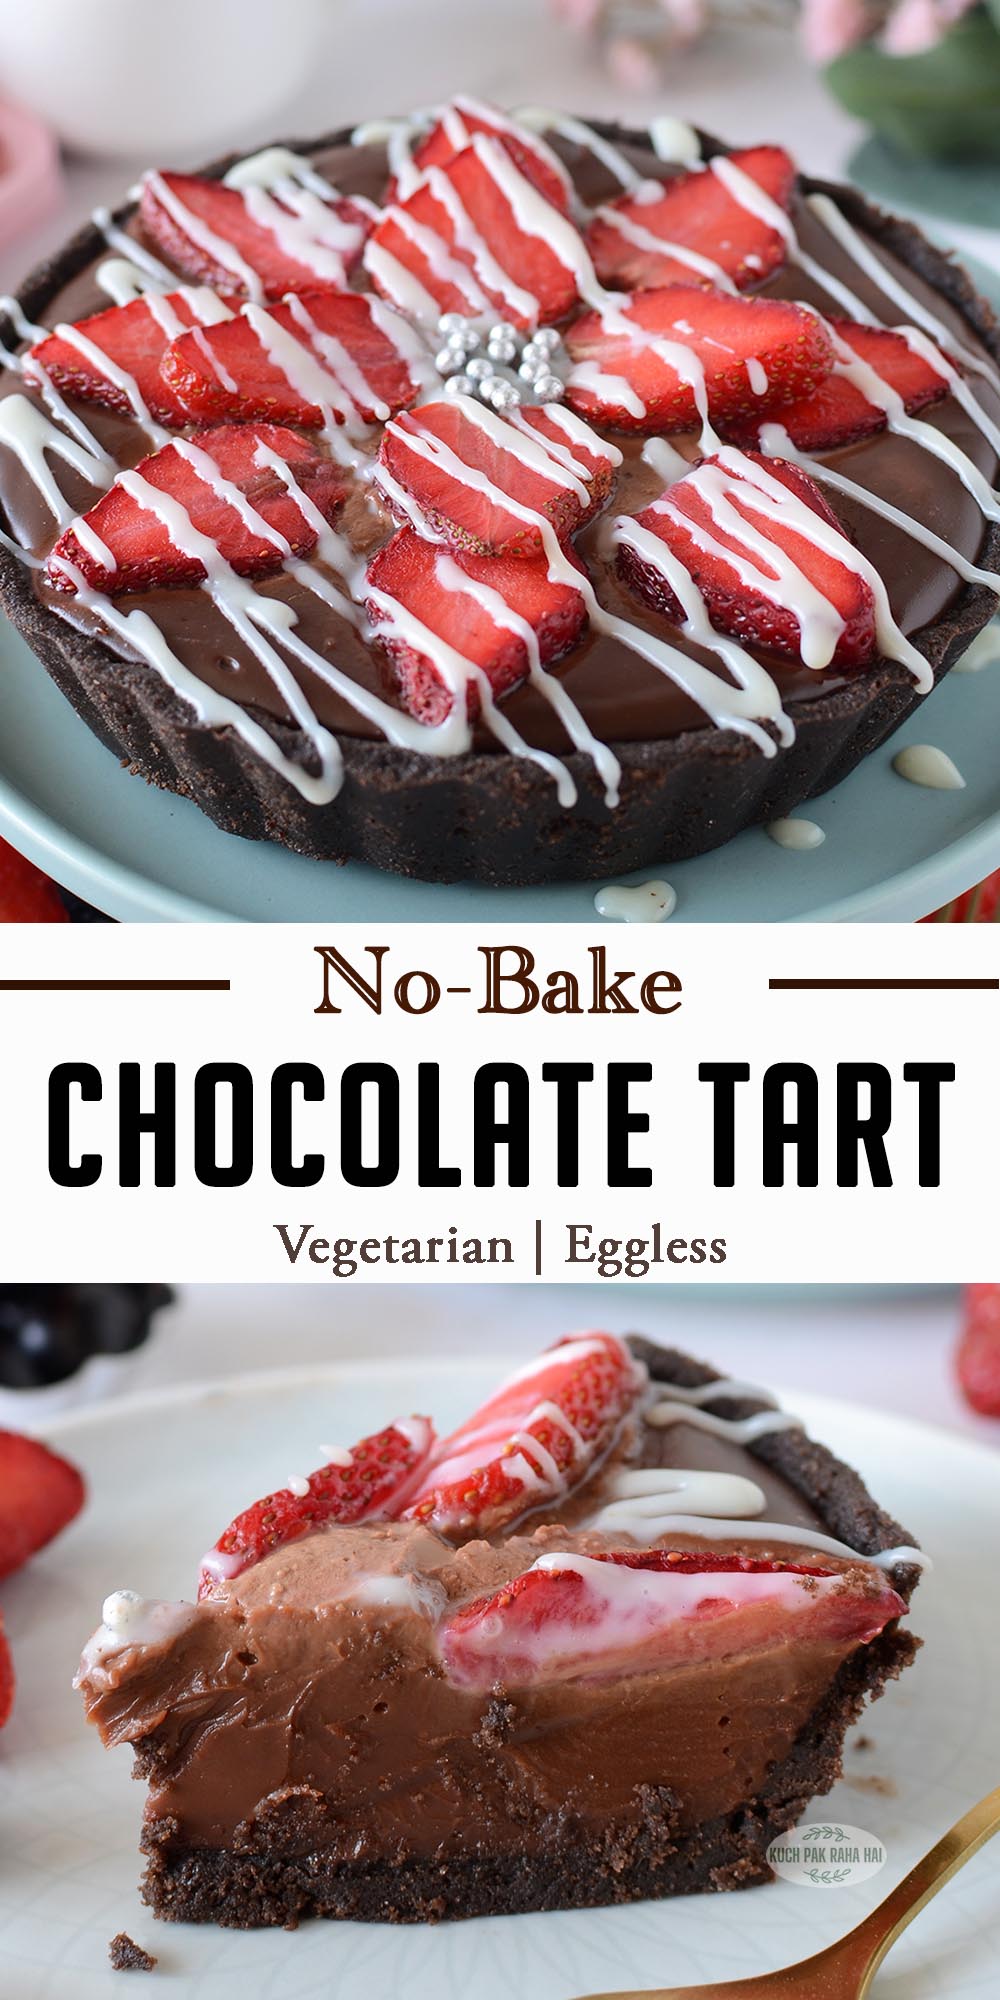 No bake chocolate tart recipe with oreo and strawberry.